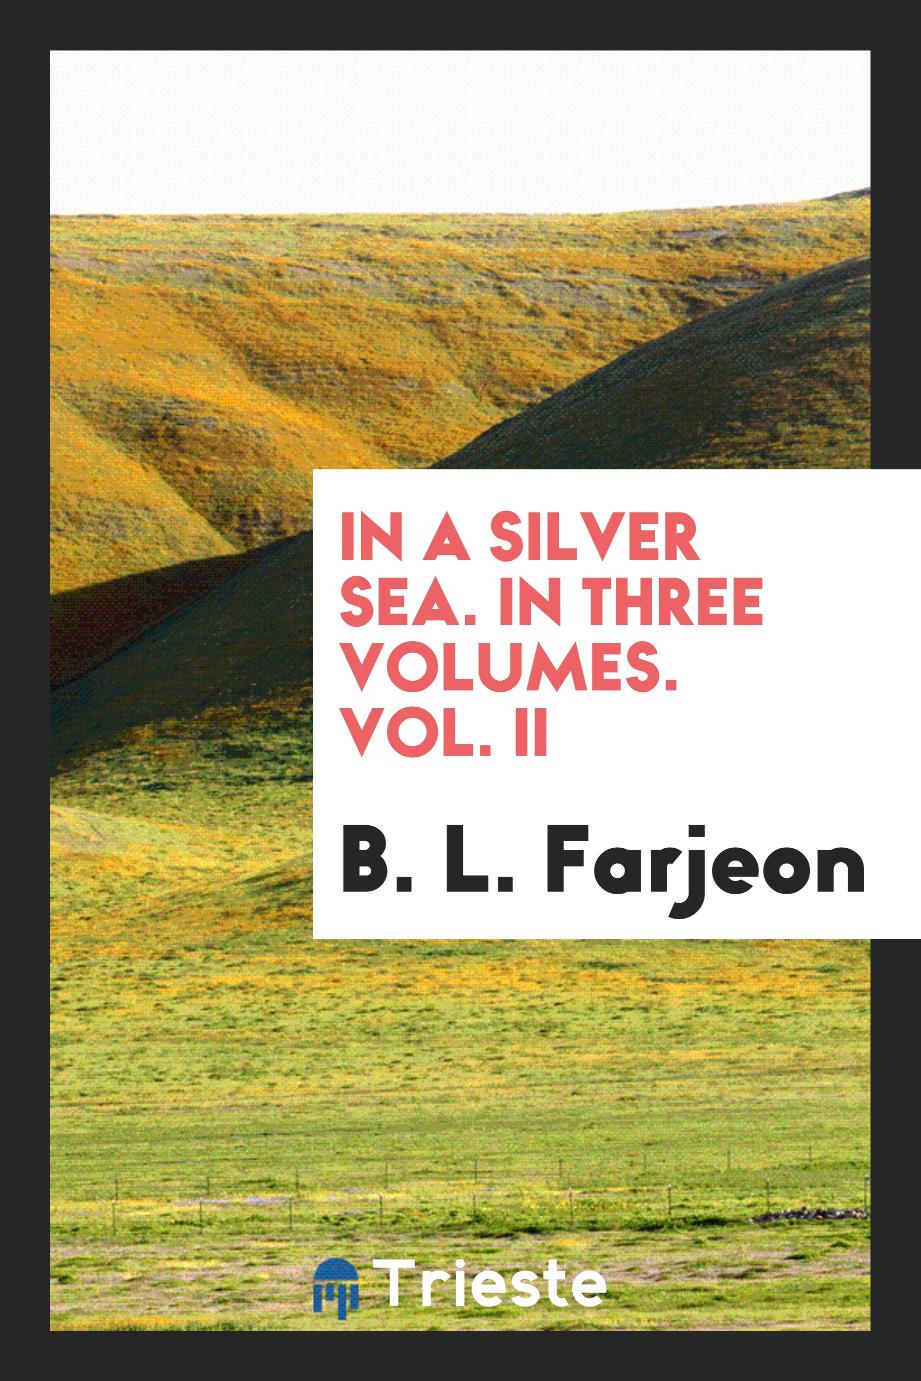 In a silver sea. In three volumes. Vol. II